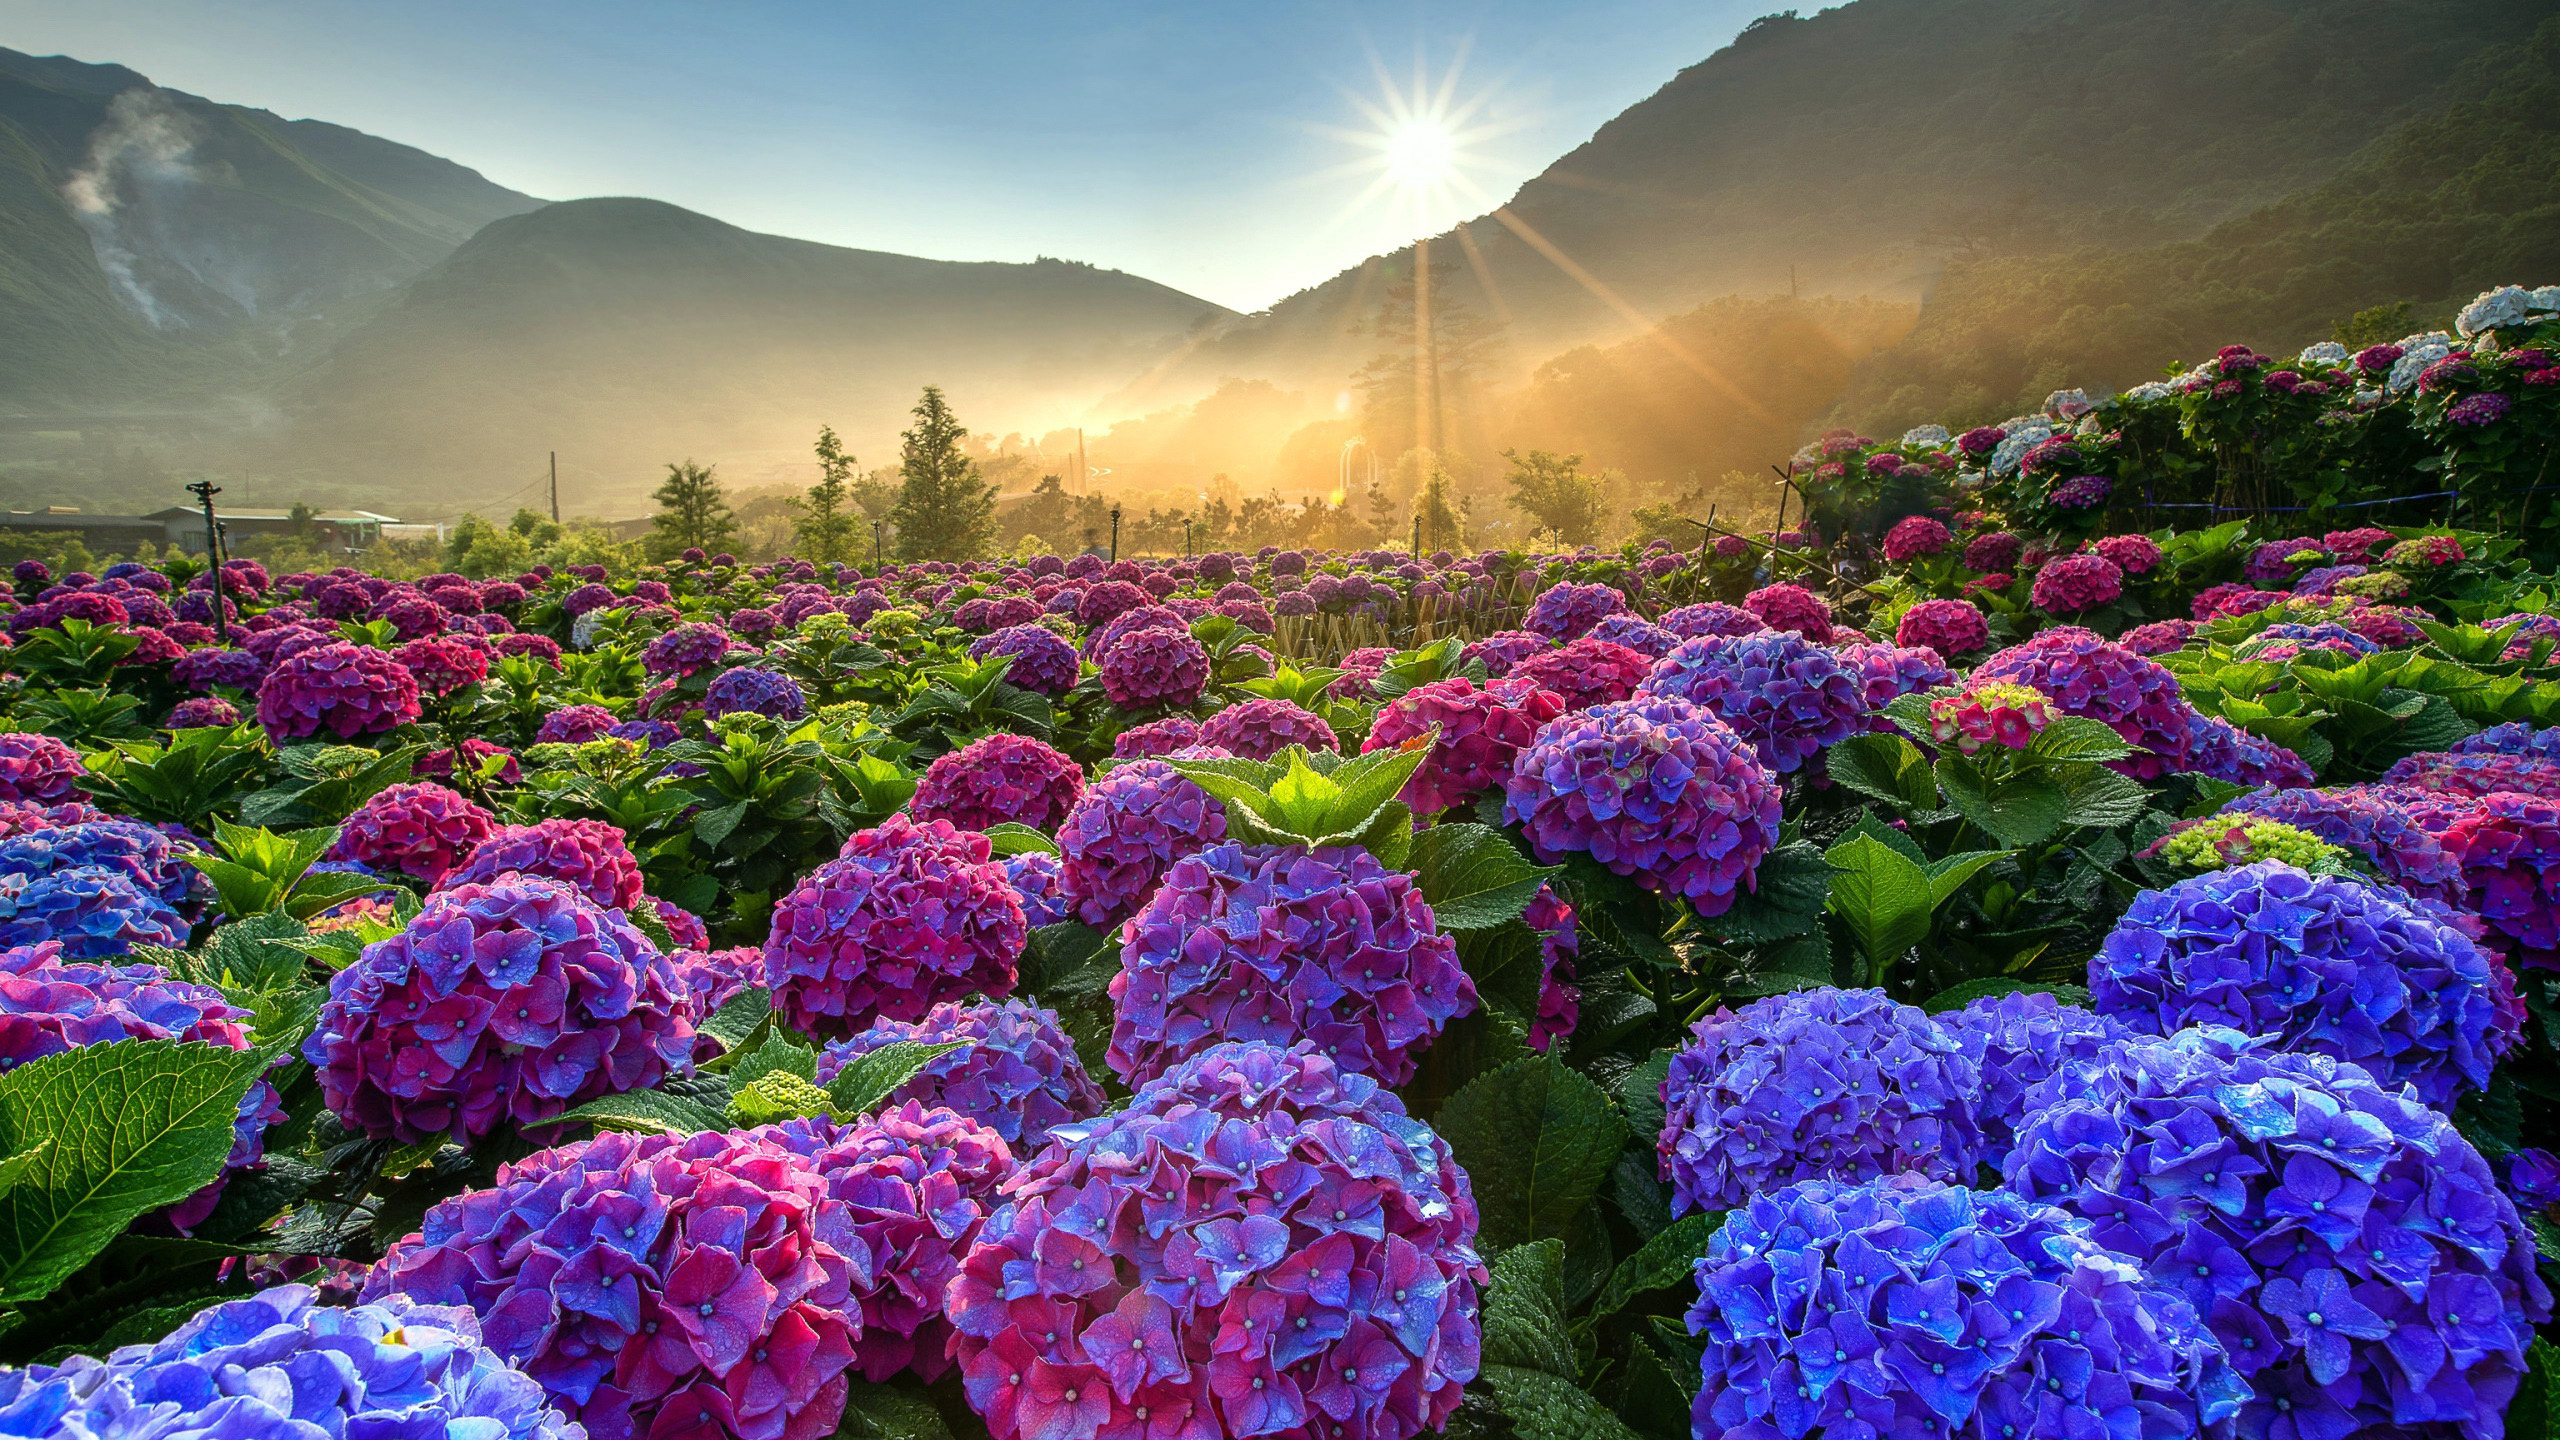 Hydrangea wallpaper, HD background image, Botanical paradise, Nature's allure, 2560x1440 HD Desktop